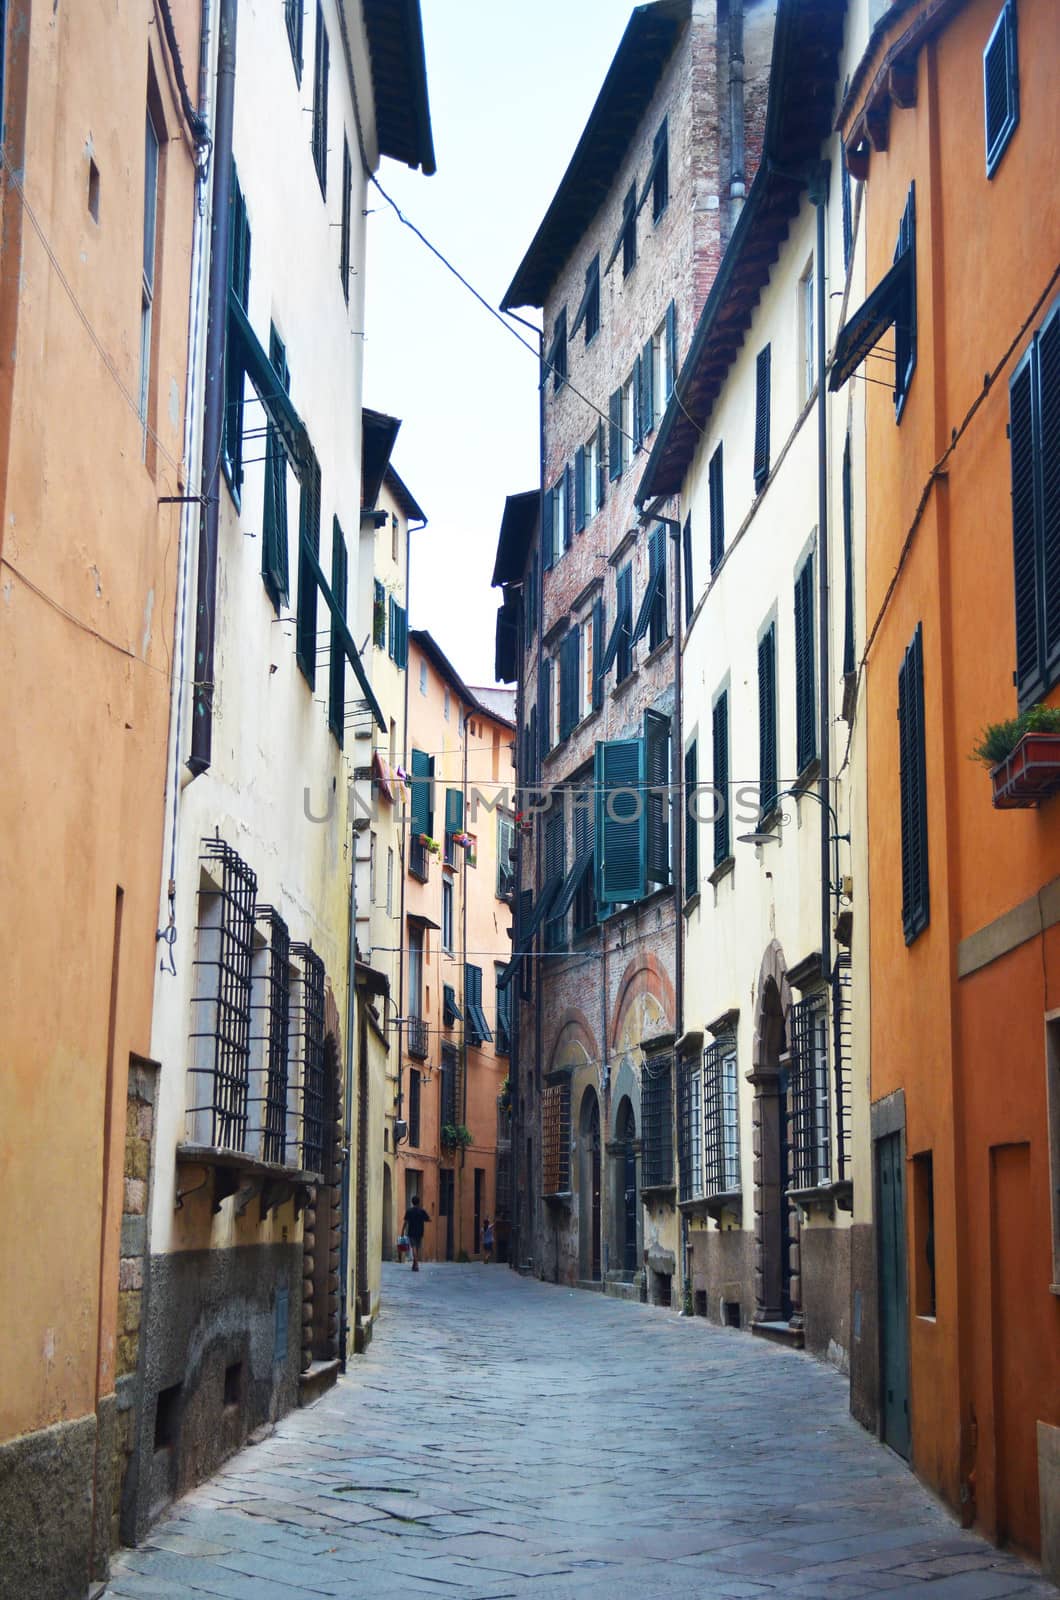 Narrow old urban street in italian town by artofphoto